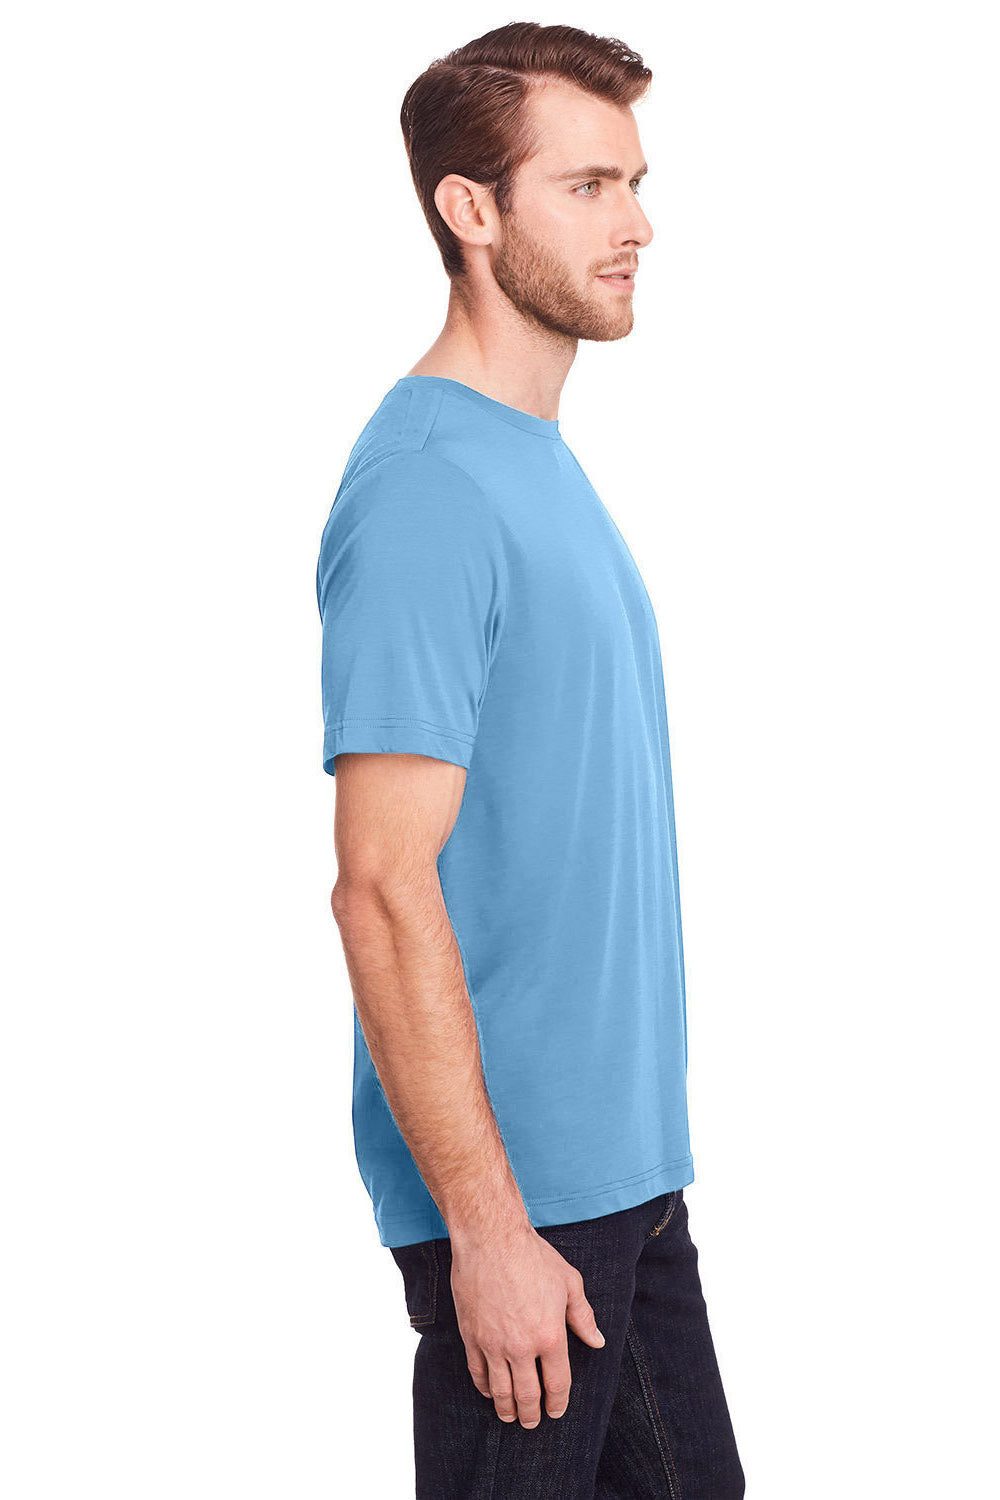 Core 365 CE111 Mens Fusion ChromaSoft Performance Moisture Wicking Short Sleeve Crewneck T-Shirt Columbia Blue SIde